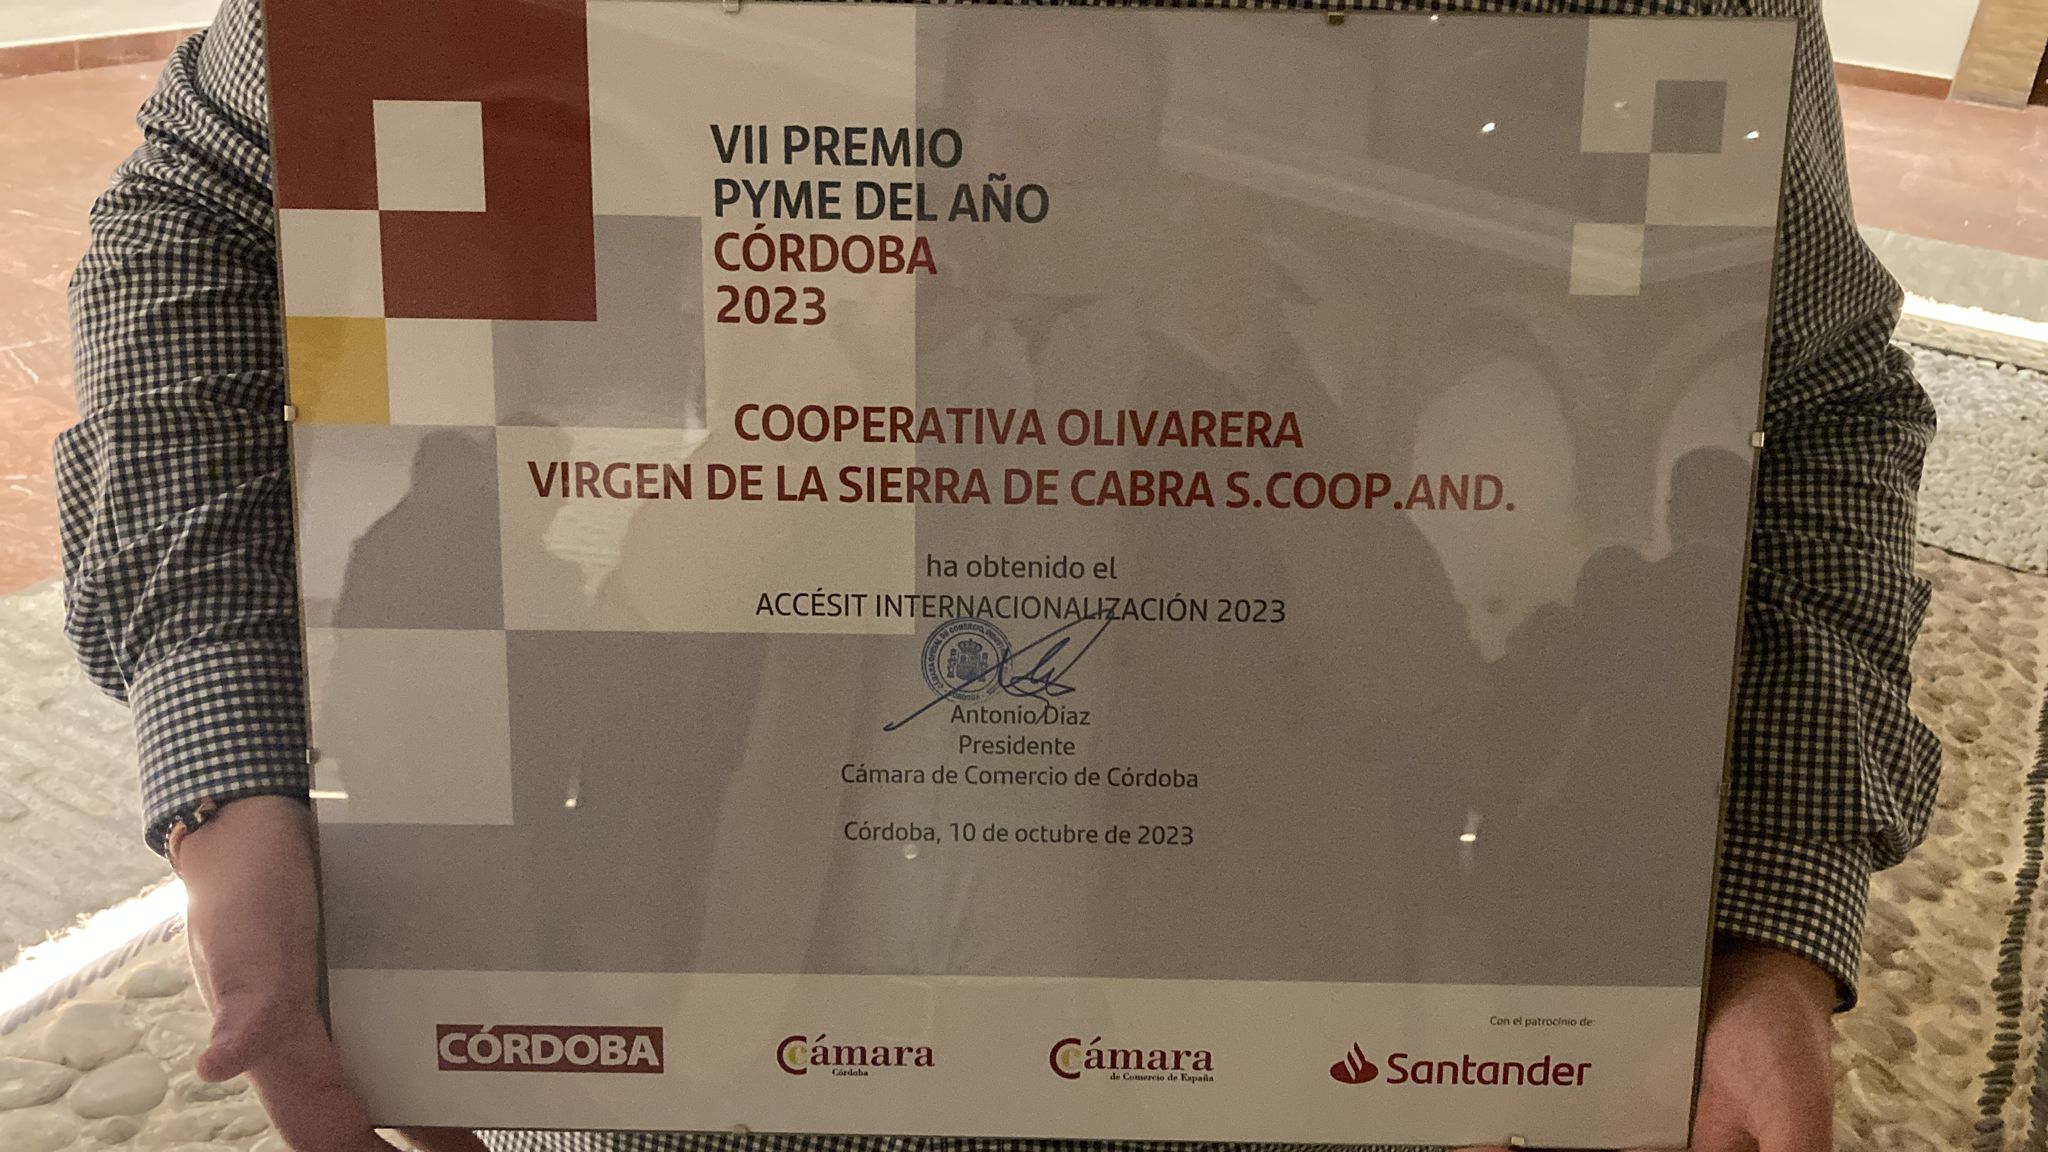 The Virgen de la Sierra de Cabra Olive Cooperative receives a second prize at the Córdoba SME of the Year Awards - 2